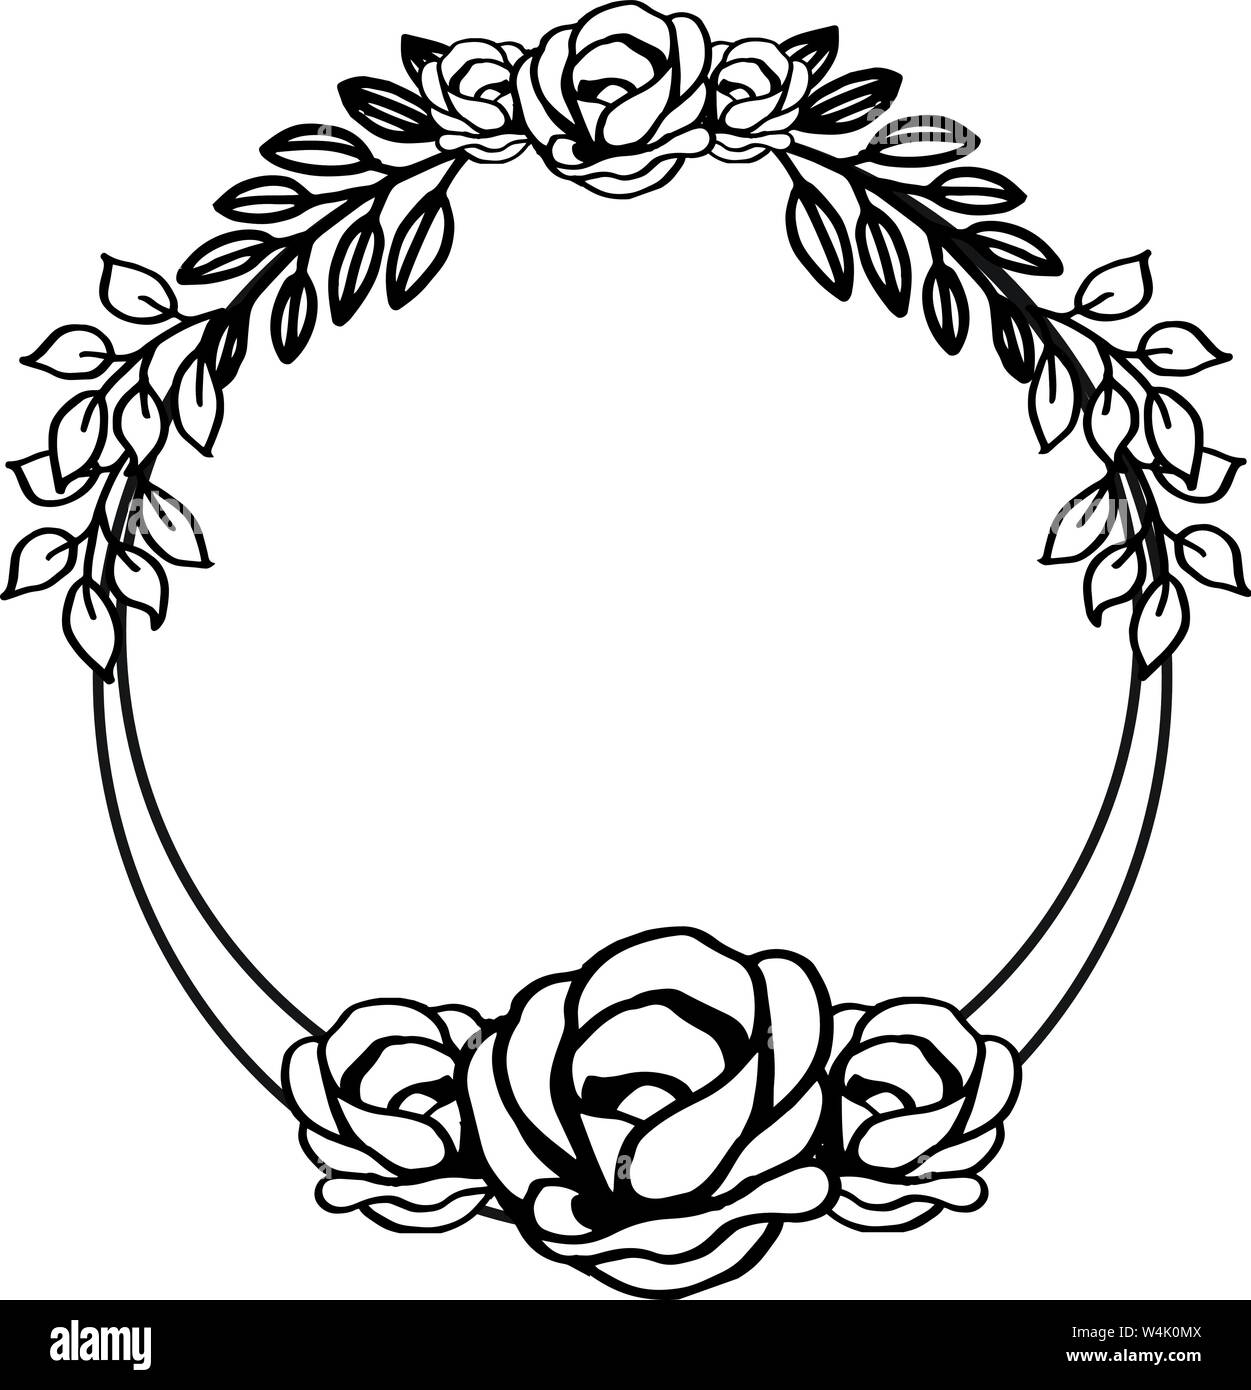 Pattern decorative of round rose flower frame. Vector illustration